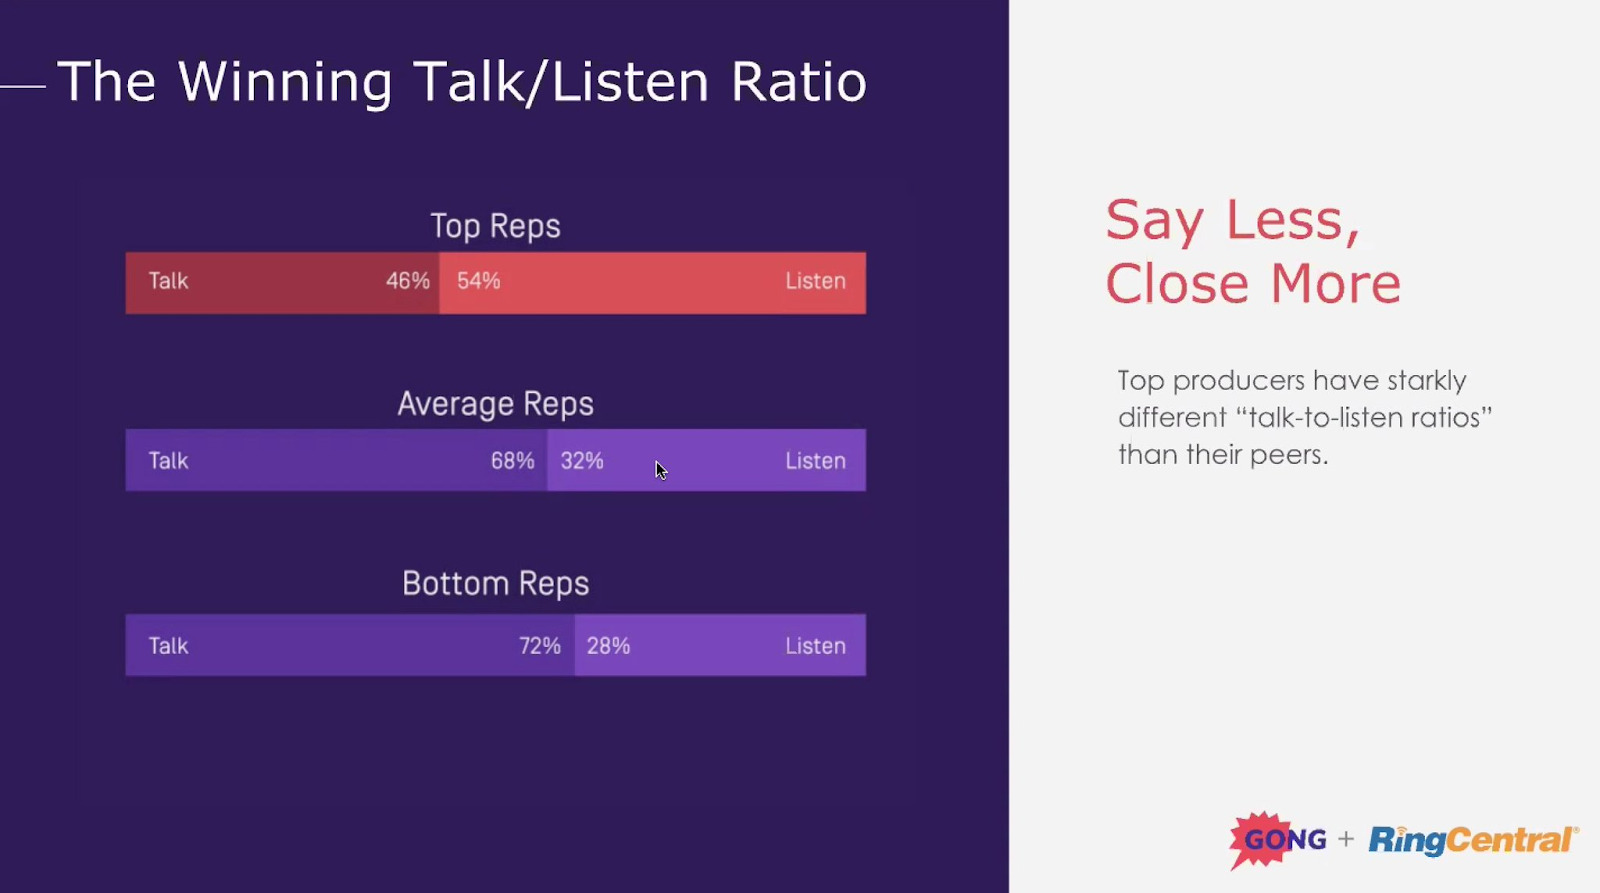 talk/listen ratio for account executives